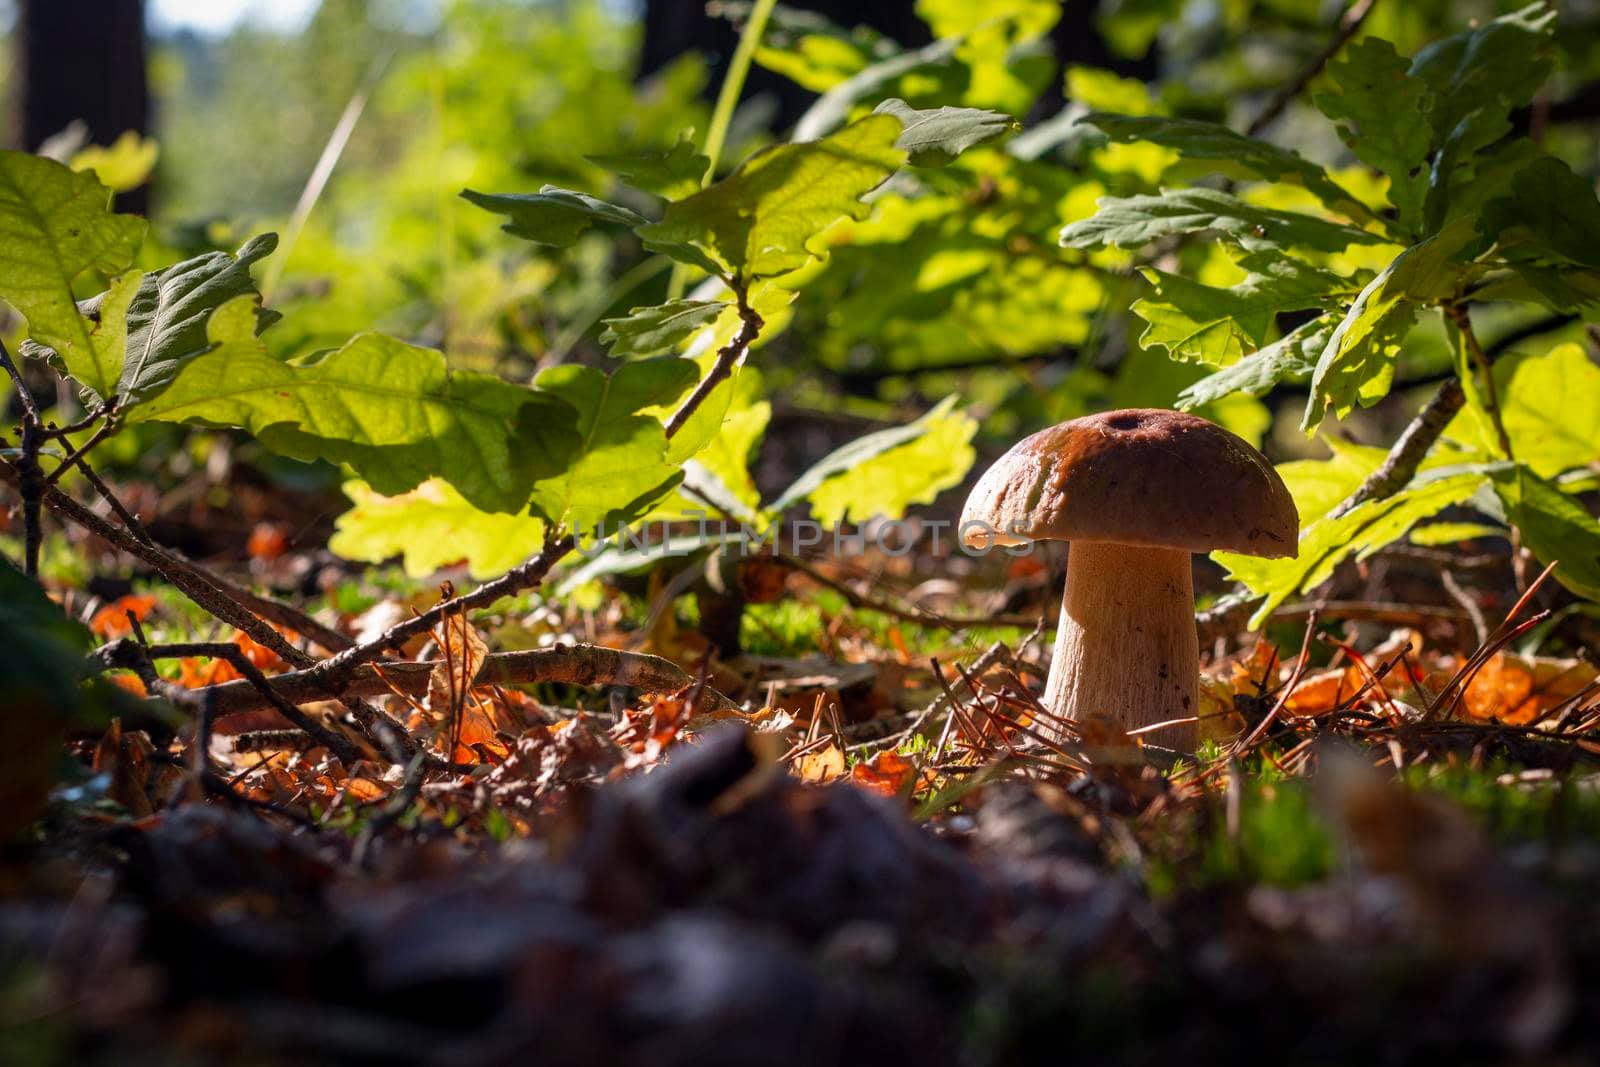 Season porcini mushroom grow in oak wood. Autumn season pick up mushrooms. Healthy vegetarian food growing in nature. Forest organic plants